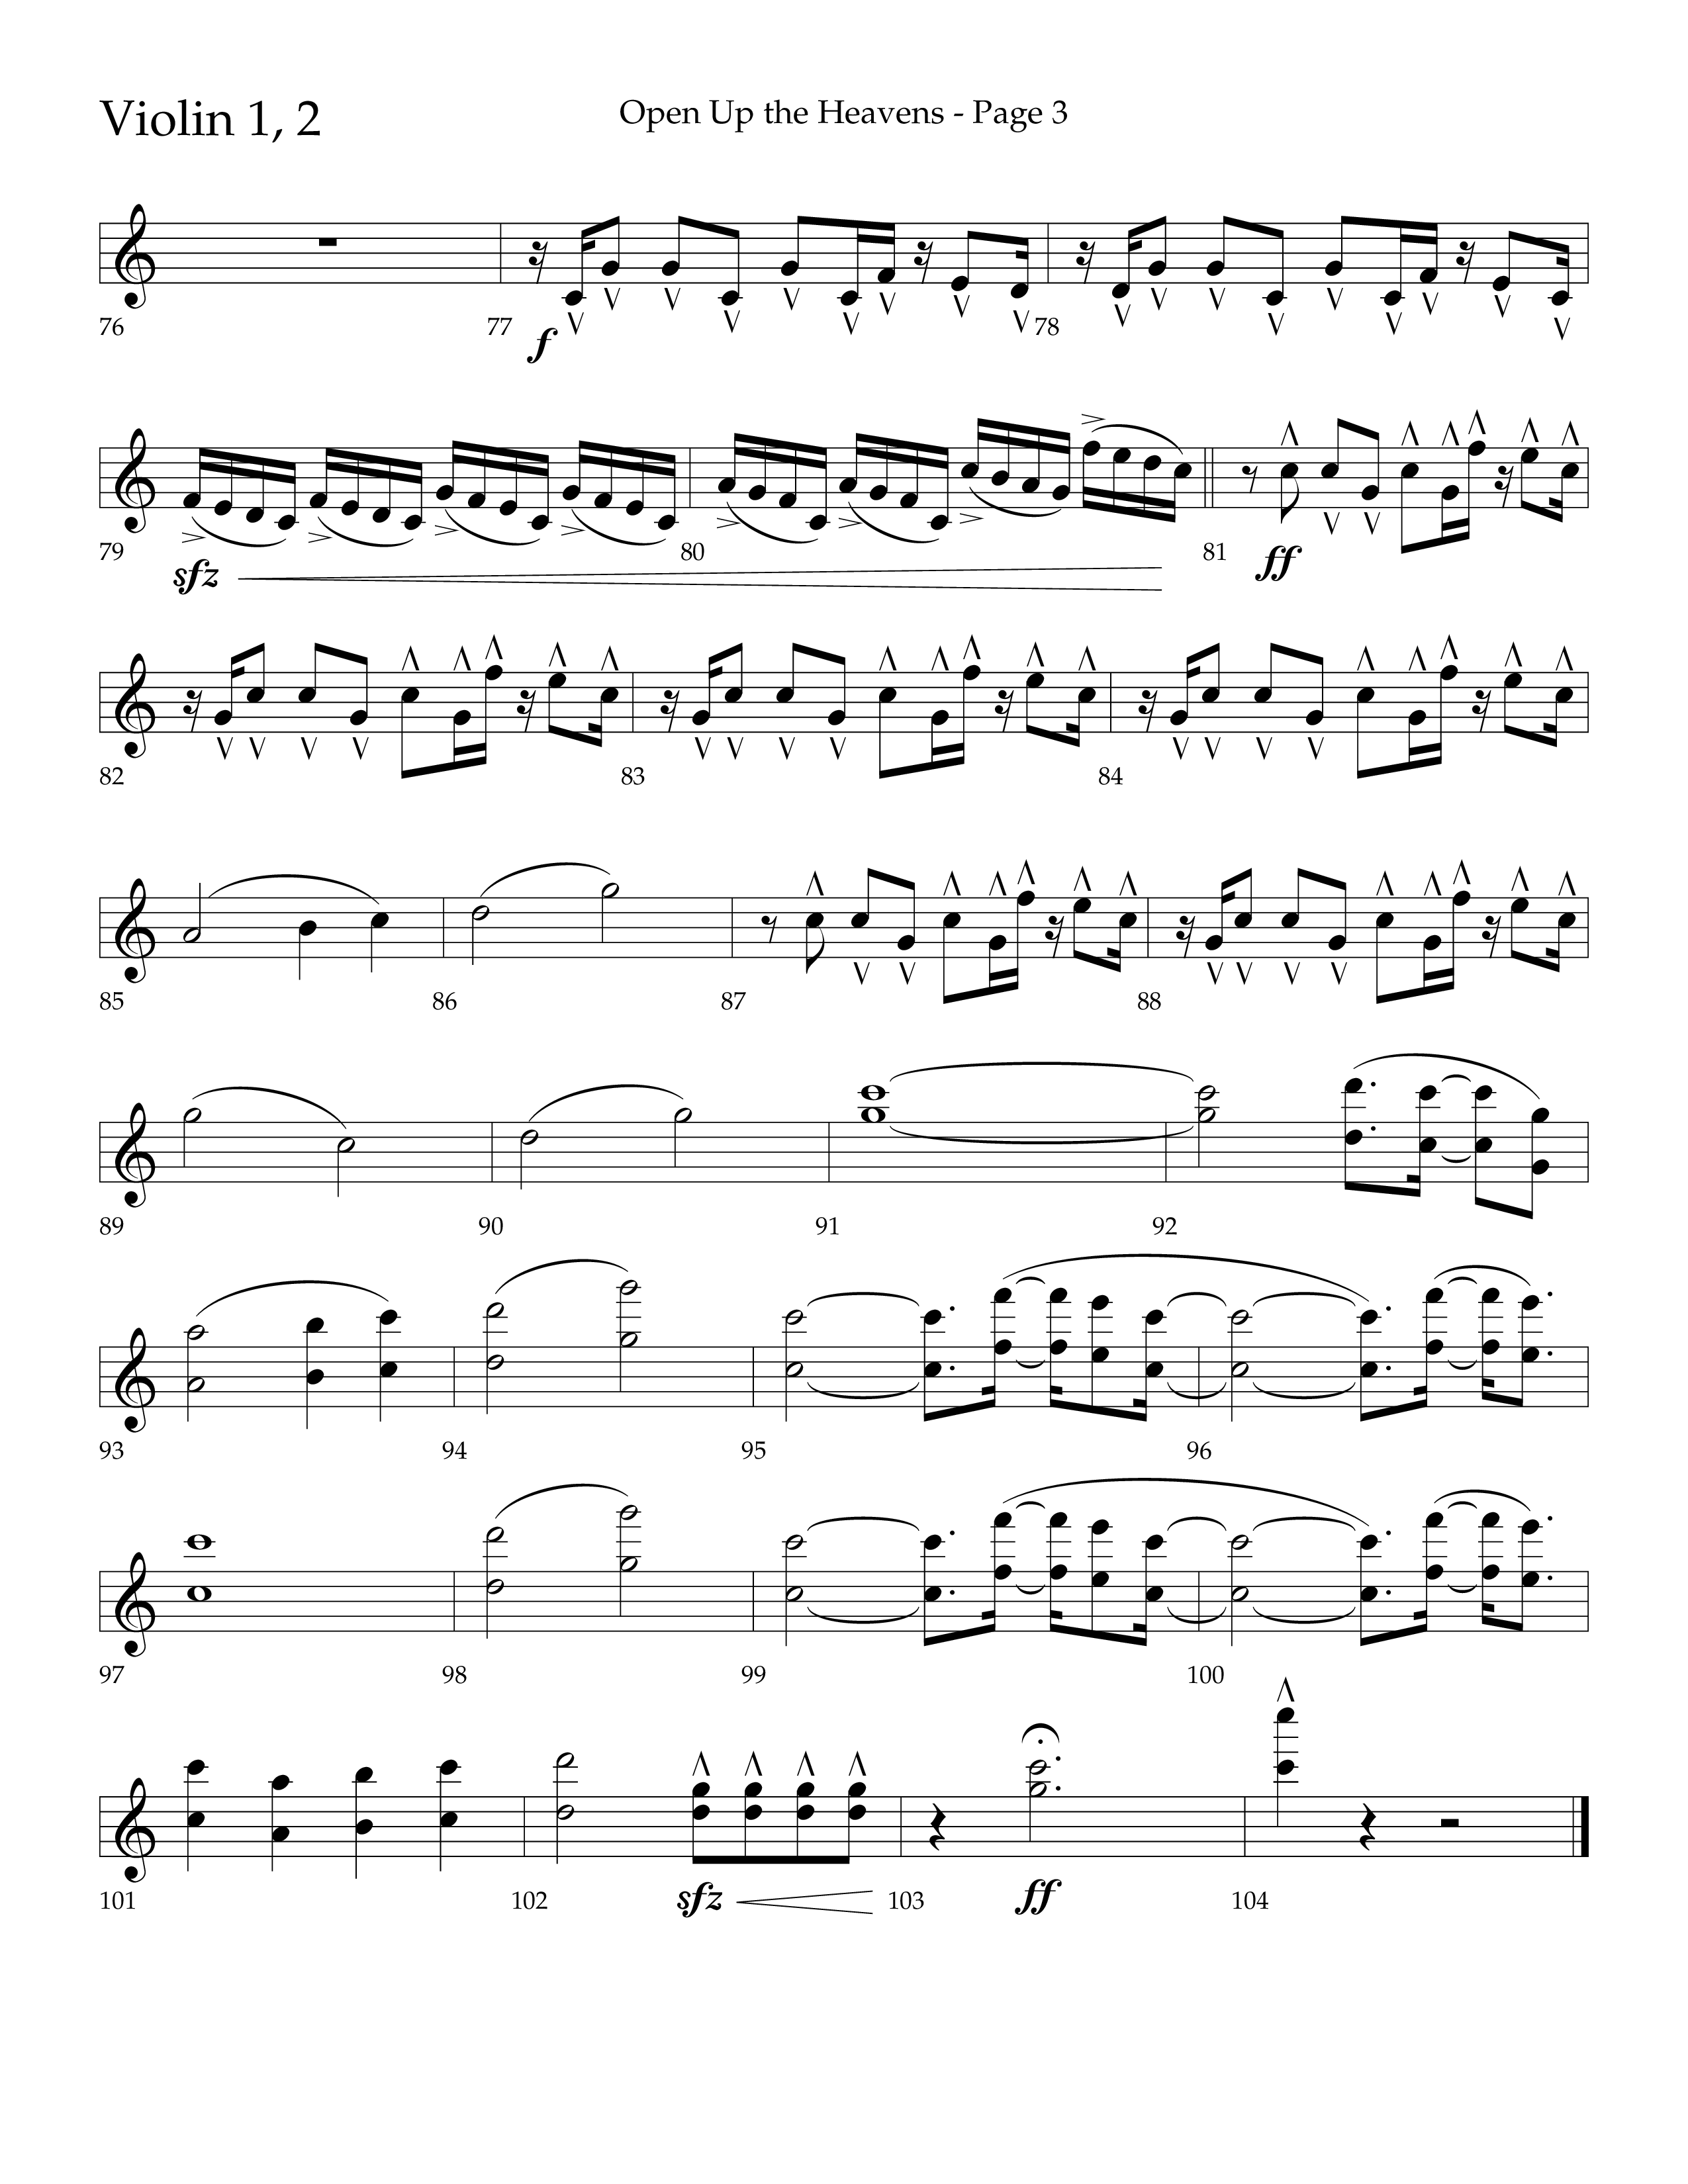 Open Up The Heavens (Choral Anthem SATB) Violin 1/2 (Lifeway Choral / Arr. Cliff Duren)